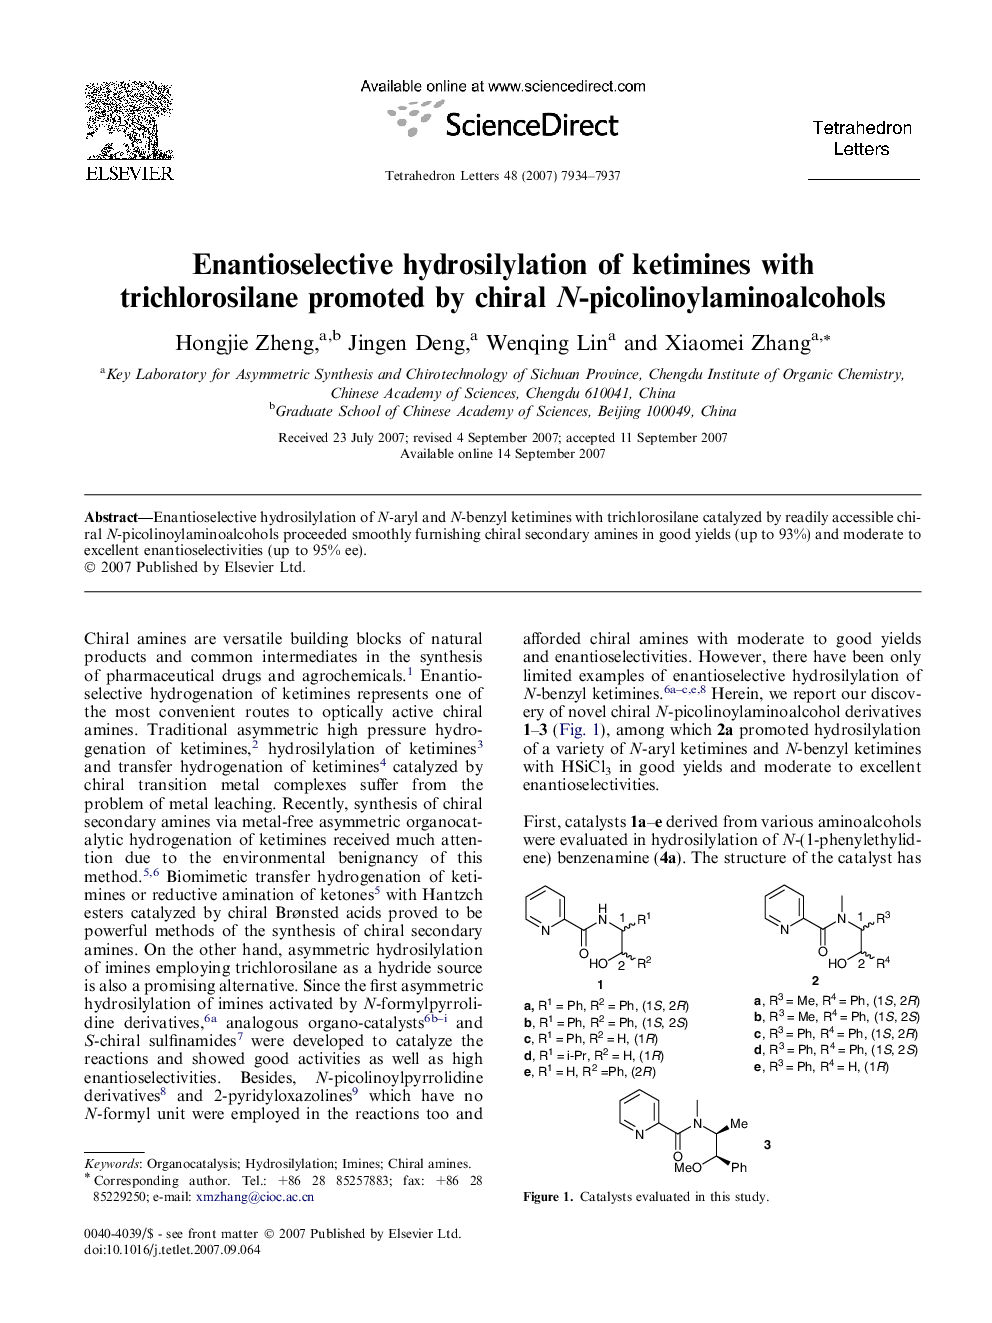 Enantioselective hydrosilylation of ketimines with trichlorosilane promoted by chiral N-picolinoylaminoalcohols